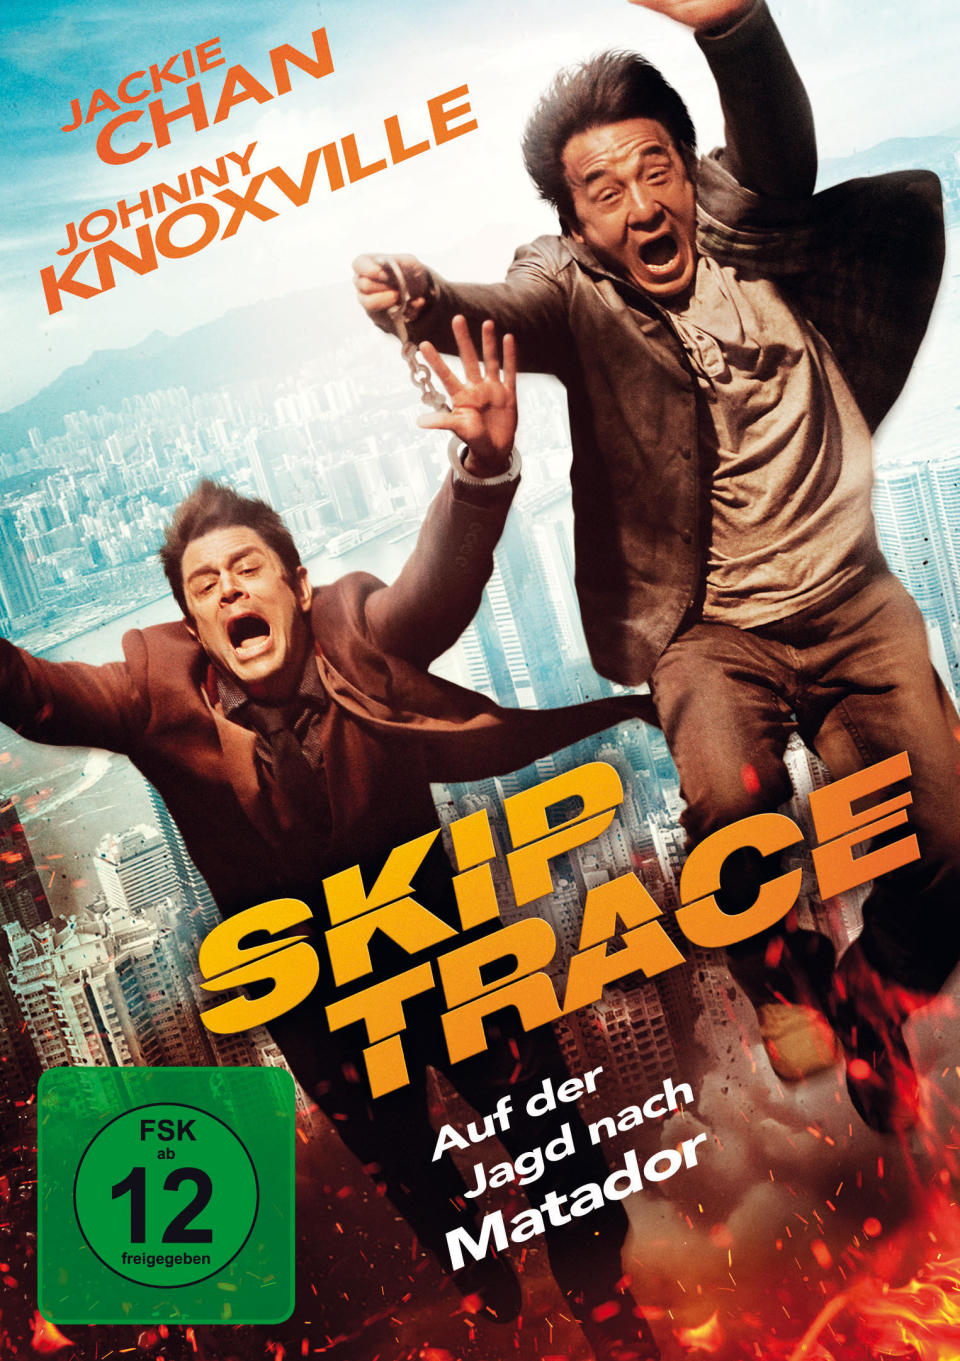 Jackie Chan – Skiptrace, auf Sky ab 3. Juni